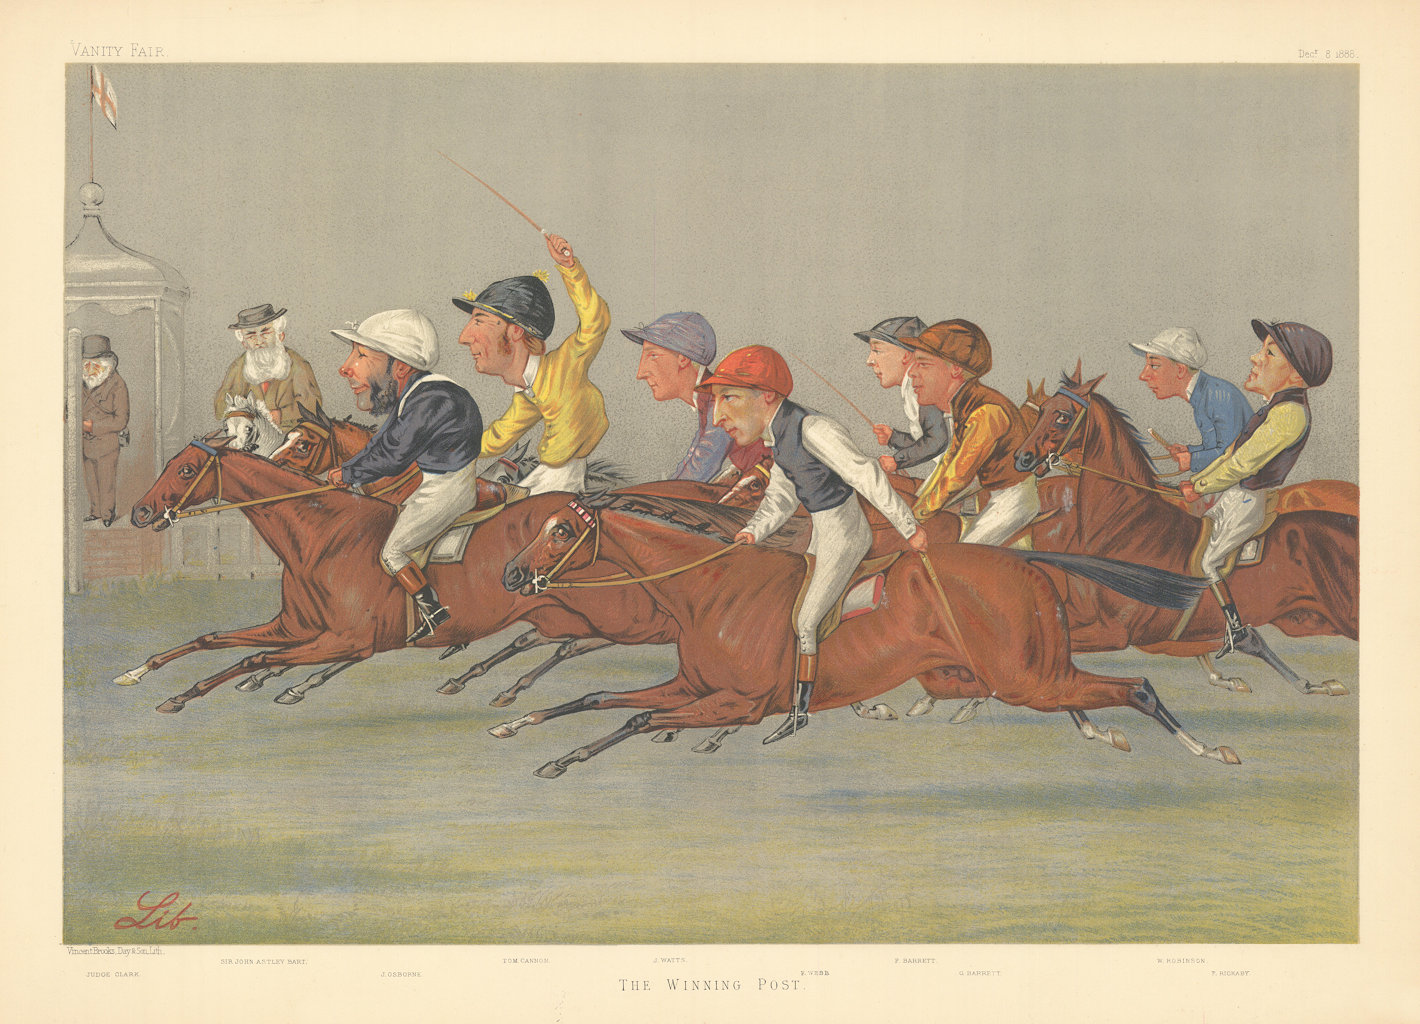 VANITY FAIR SPY CARTOON FOLIO Group of jockeys & horses 'The Winning Post' 1888